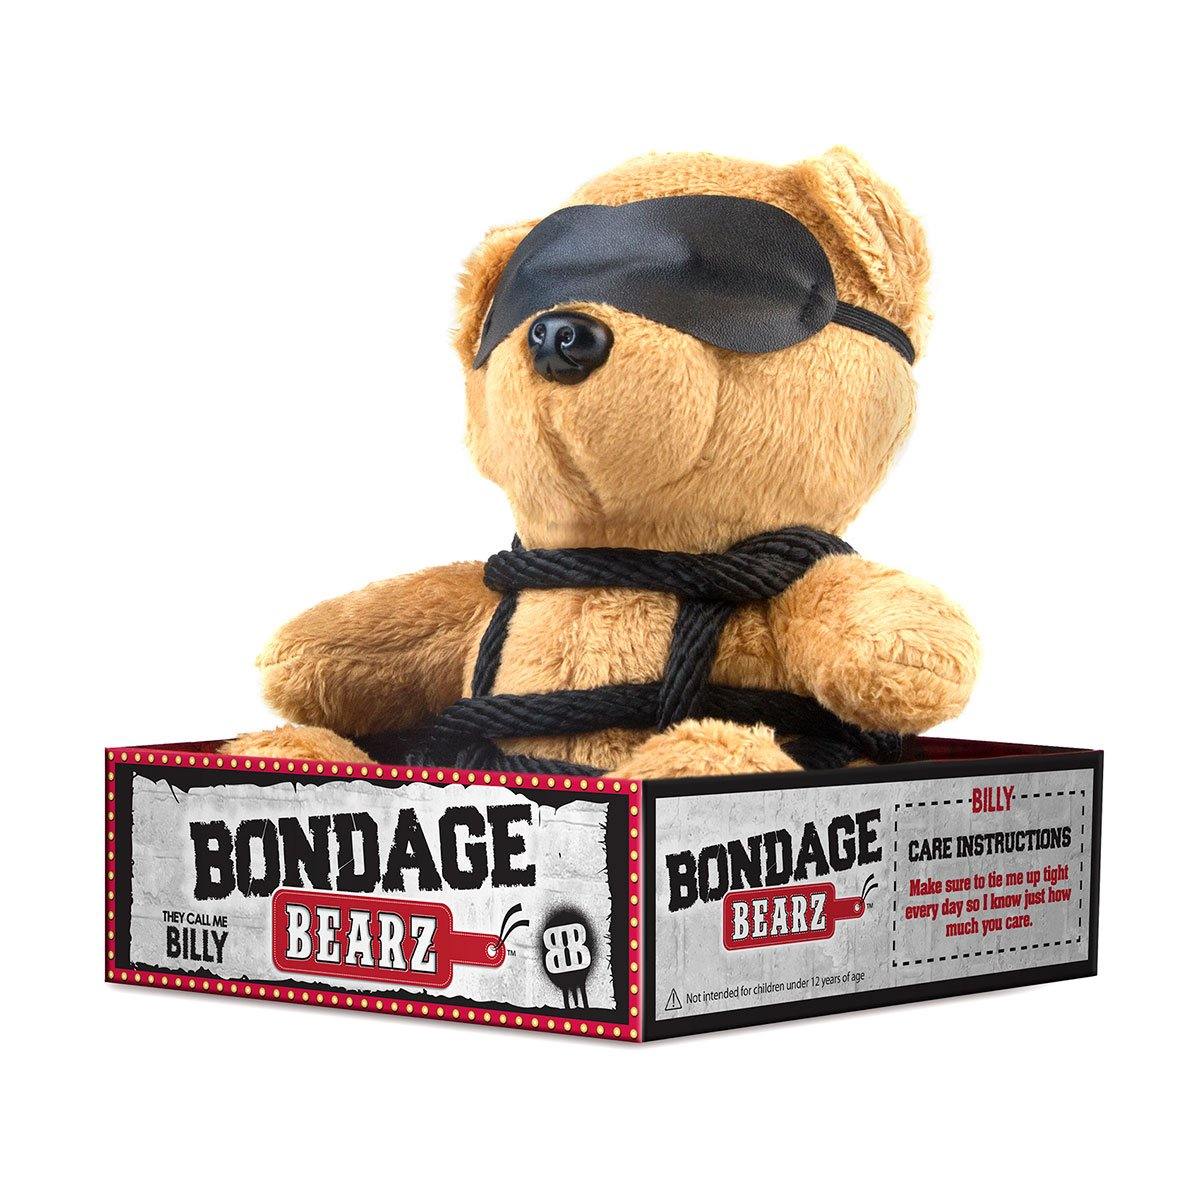 Bondage Bearz Bound Up Bill Bear - Buy At Luxury Toy X - Free 3-Day Shipping